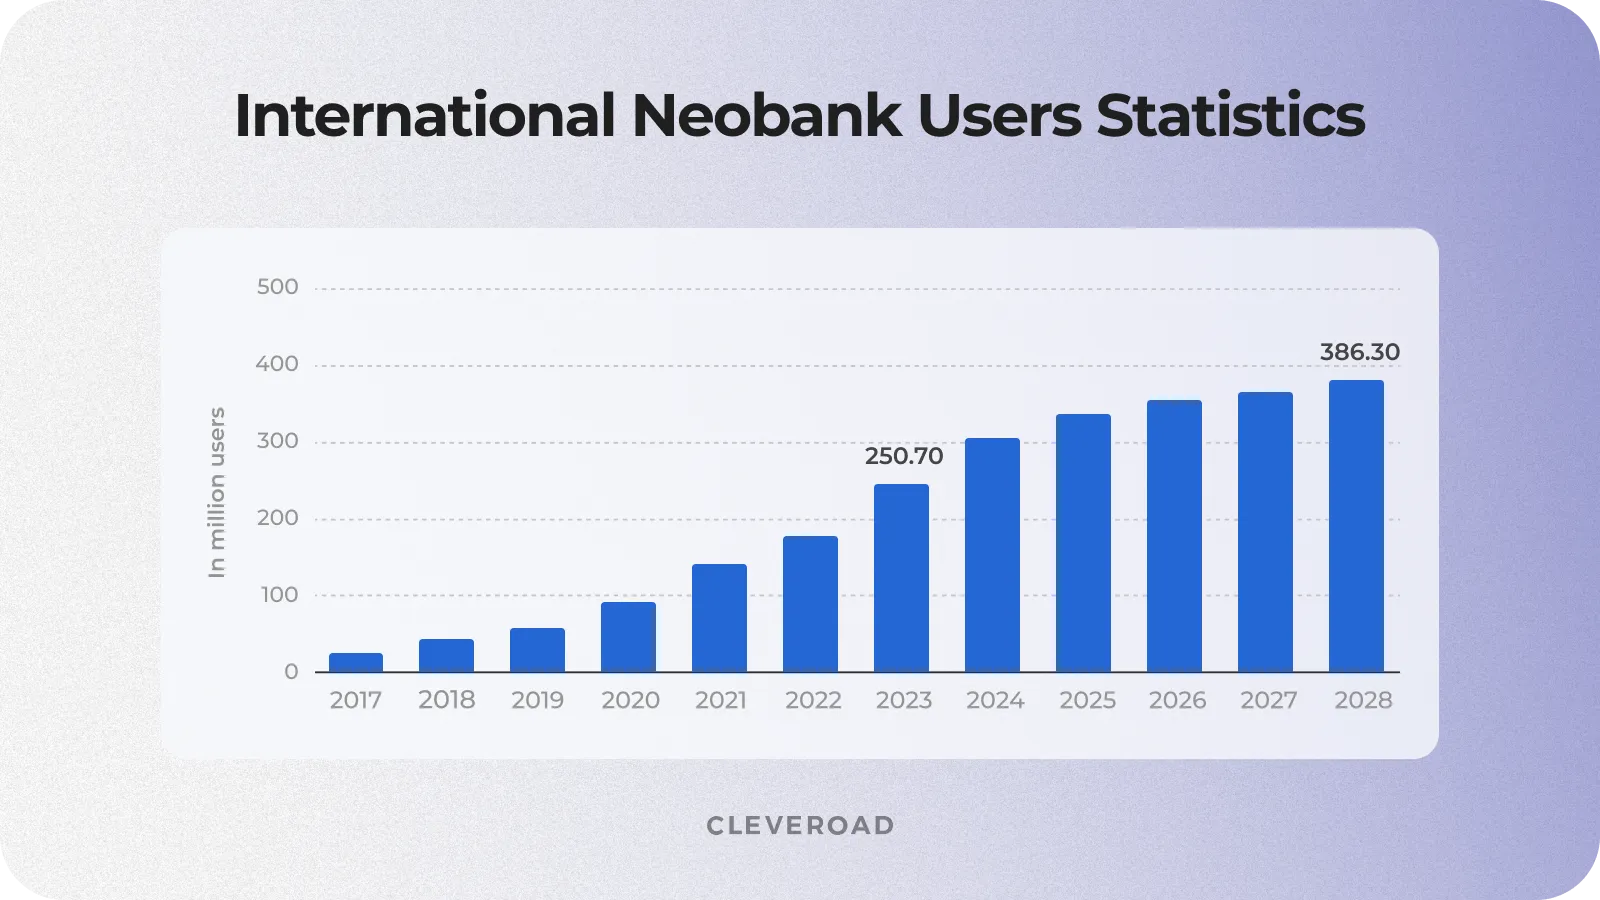 Neobank user adoption rate